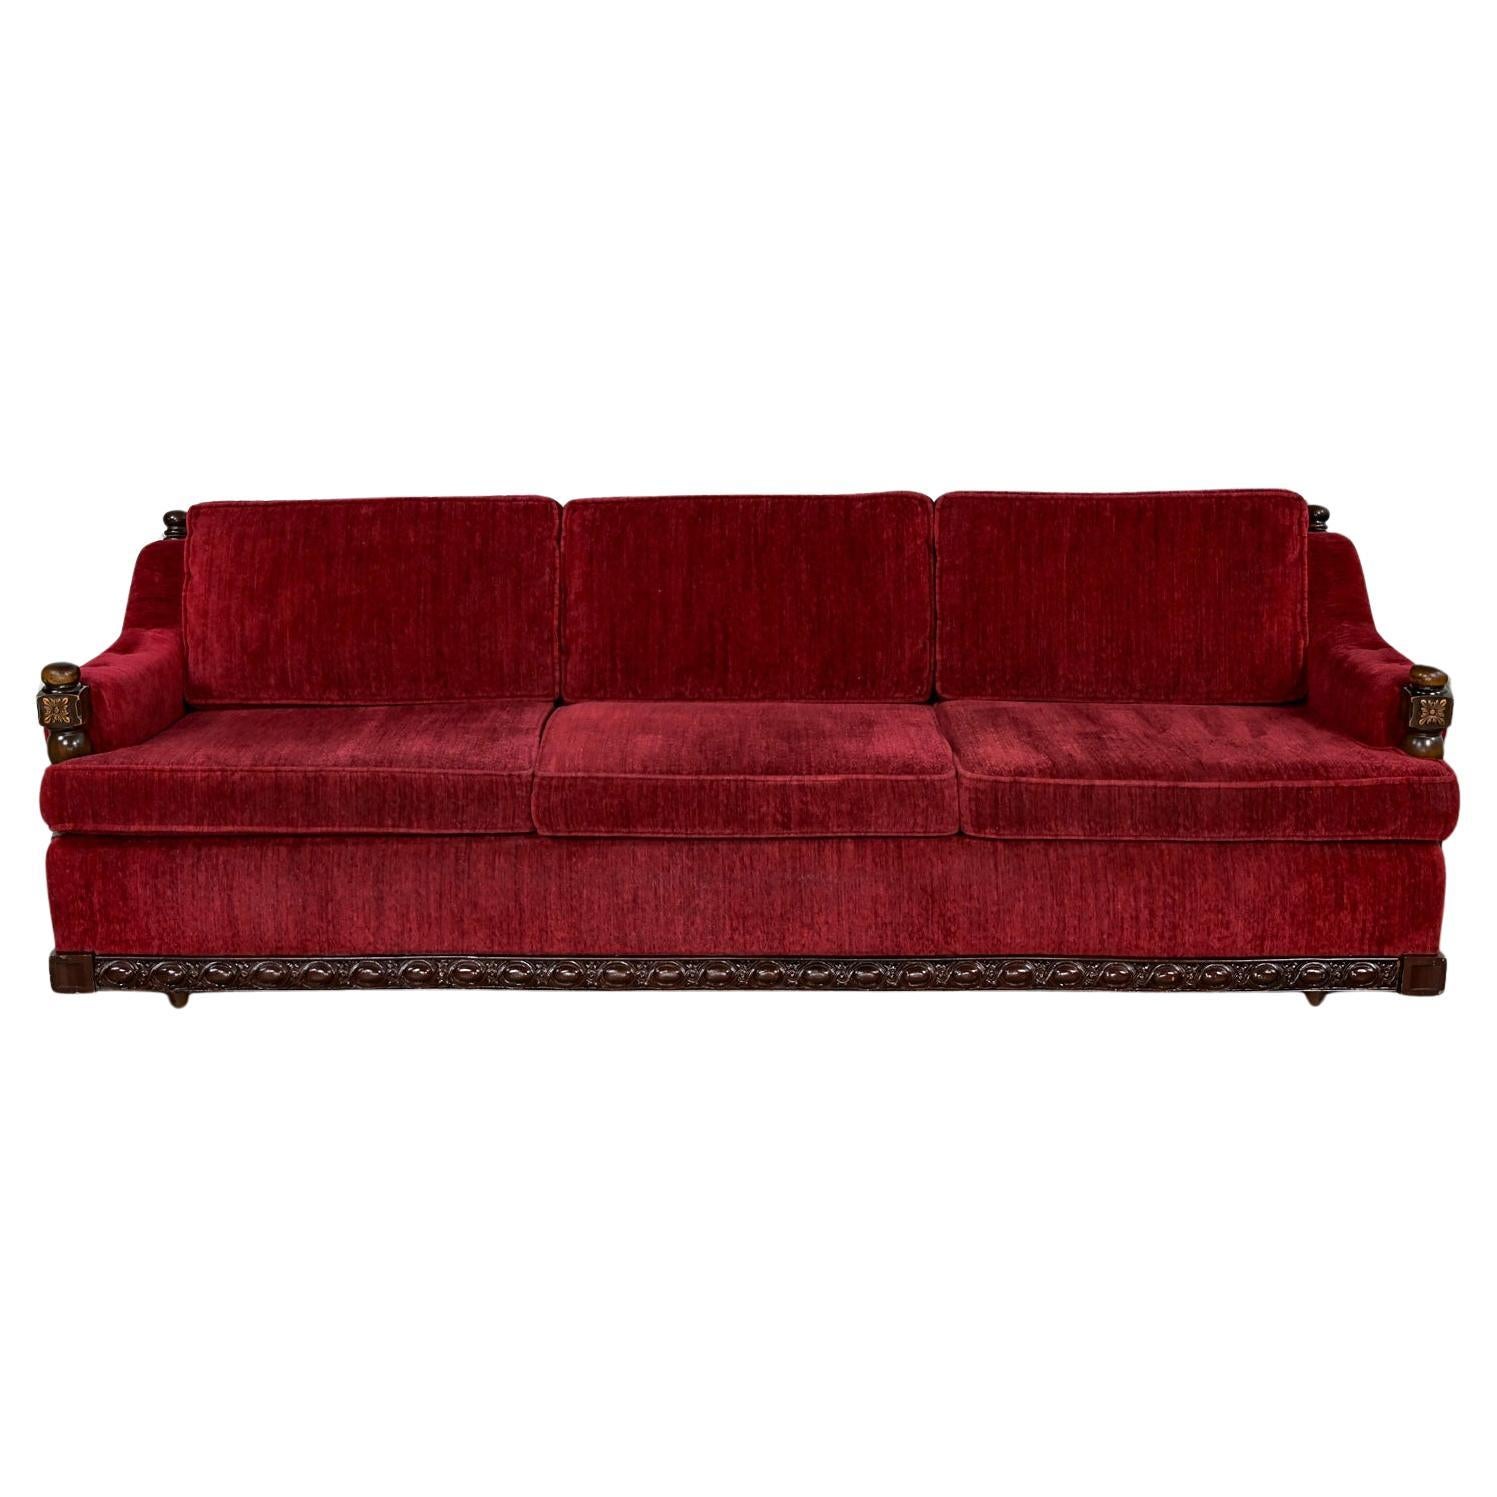 1970's Spanish Revival Rustic Red Chenille Sofa Style Artes De Mexico Internls